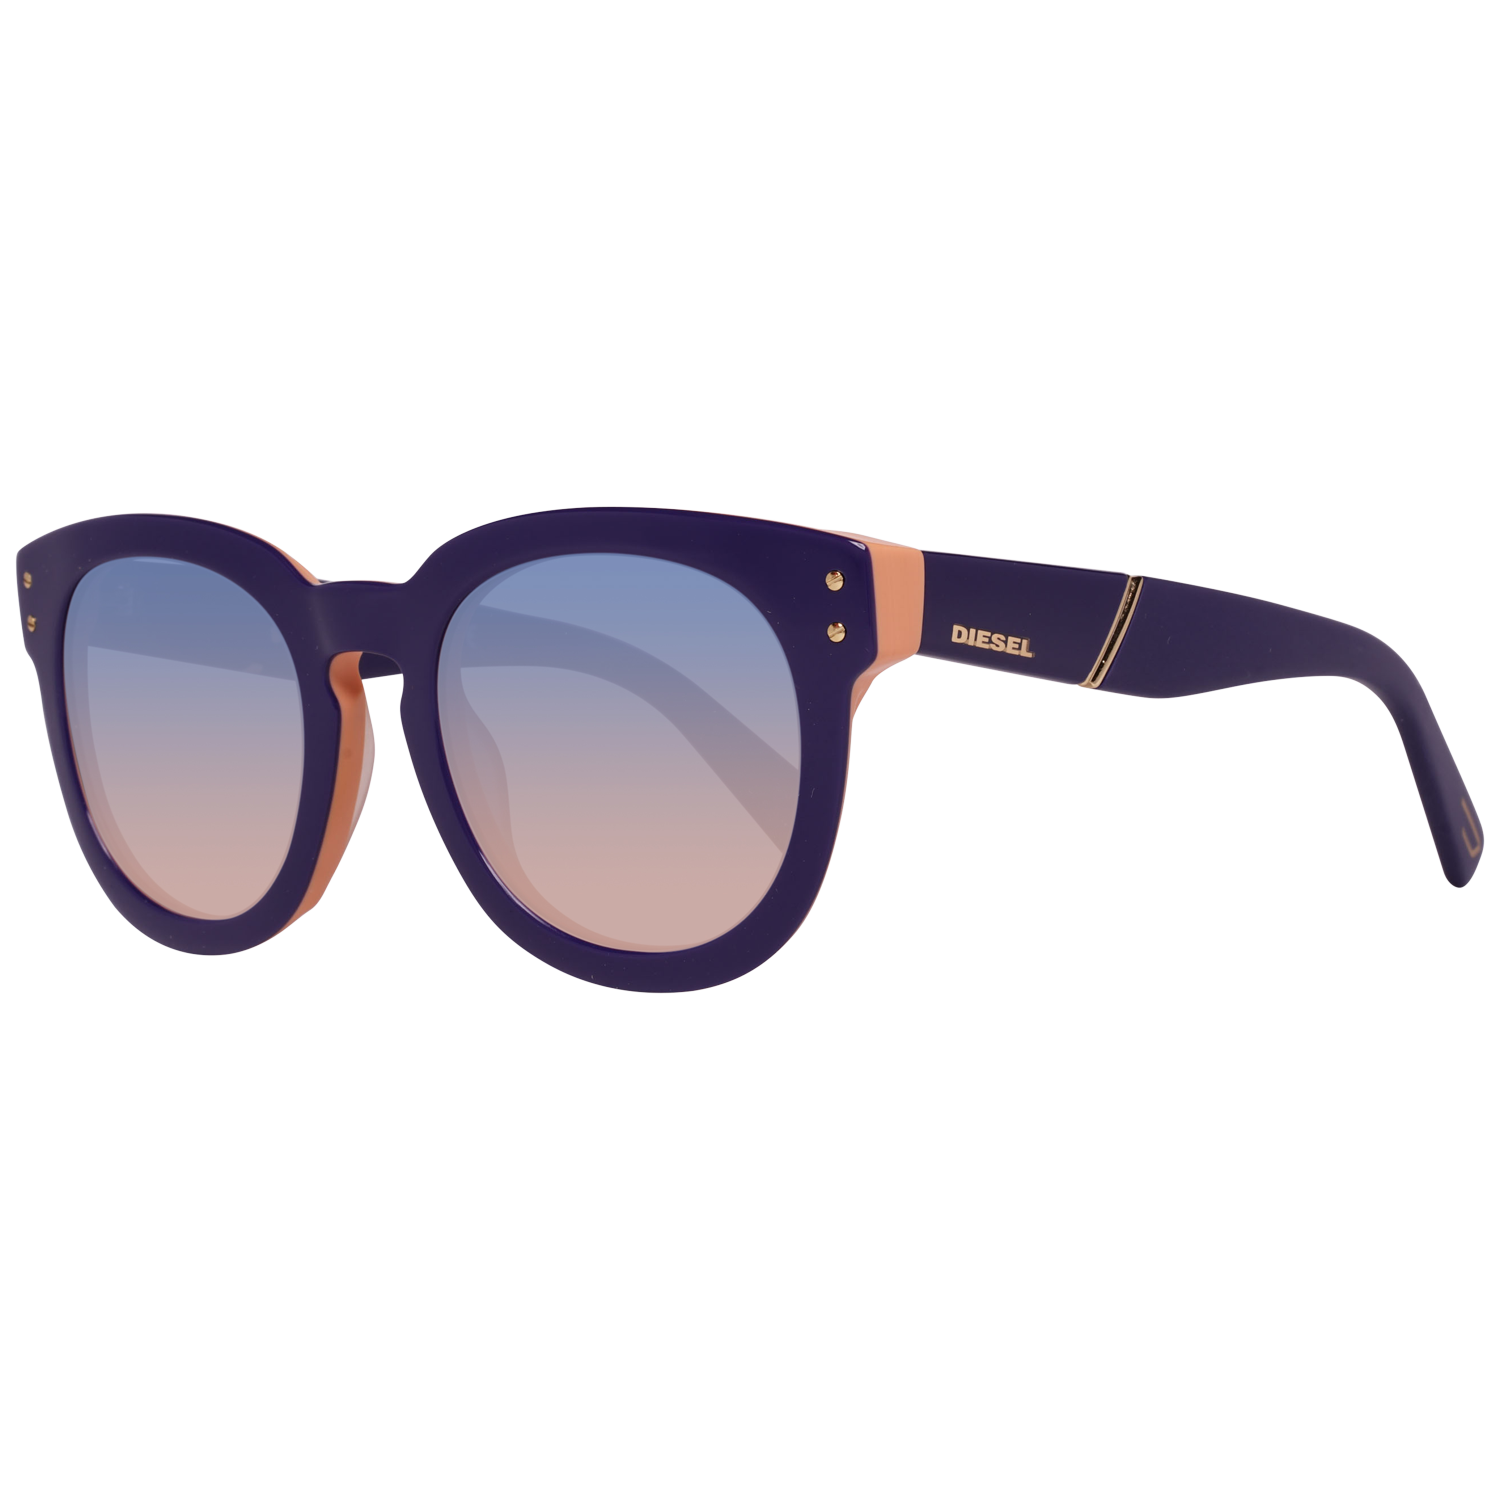 Diesel Sunglasses DL0230 92Z 51